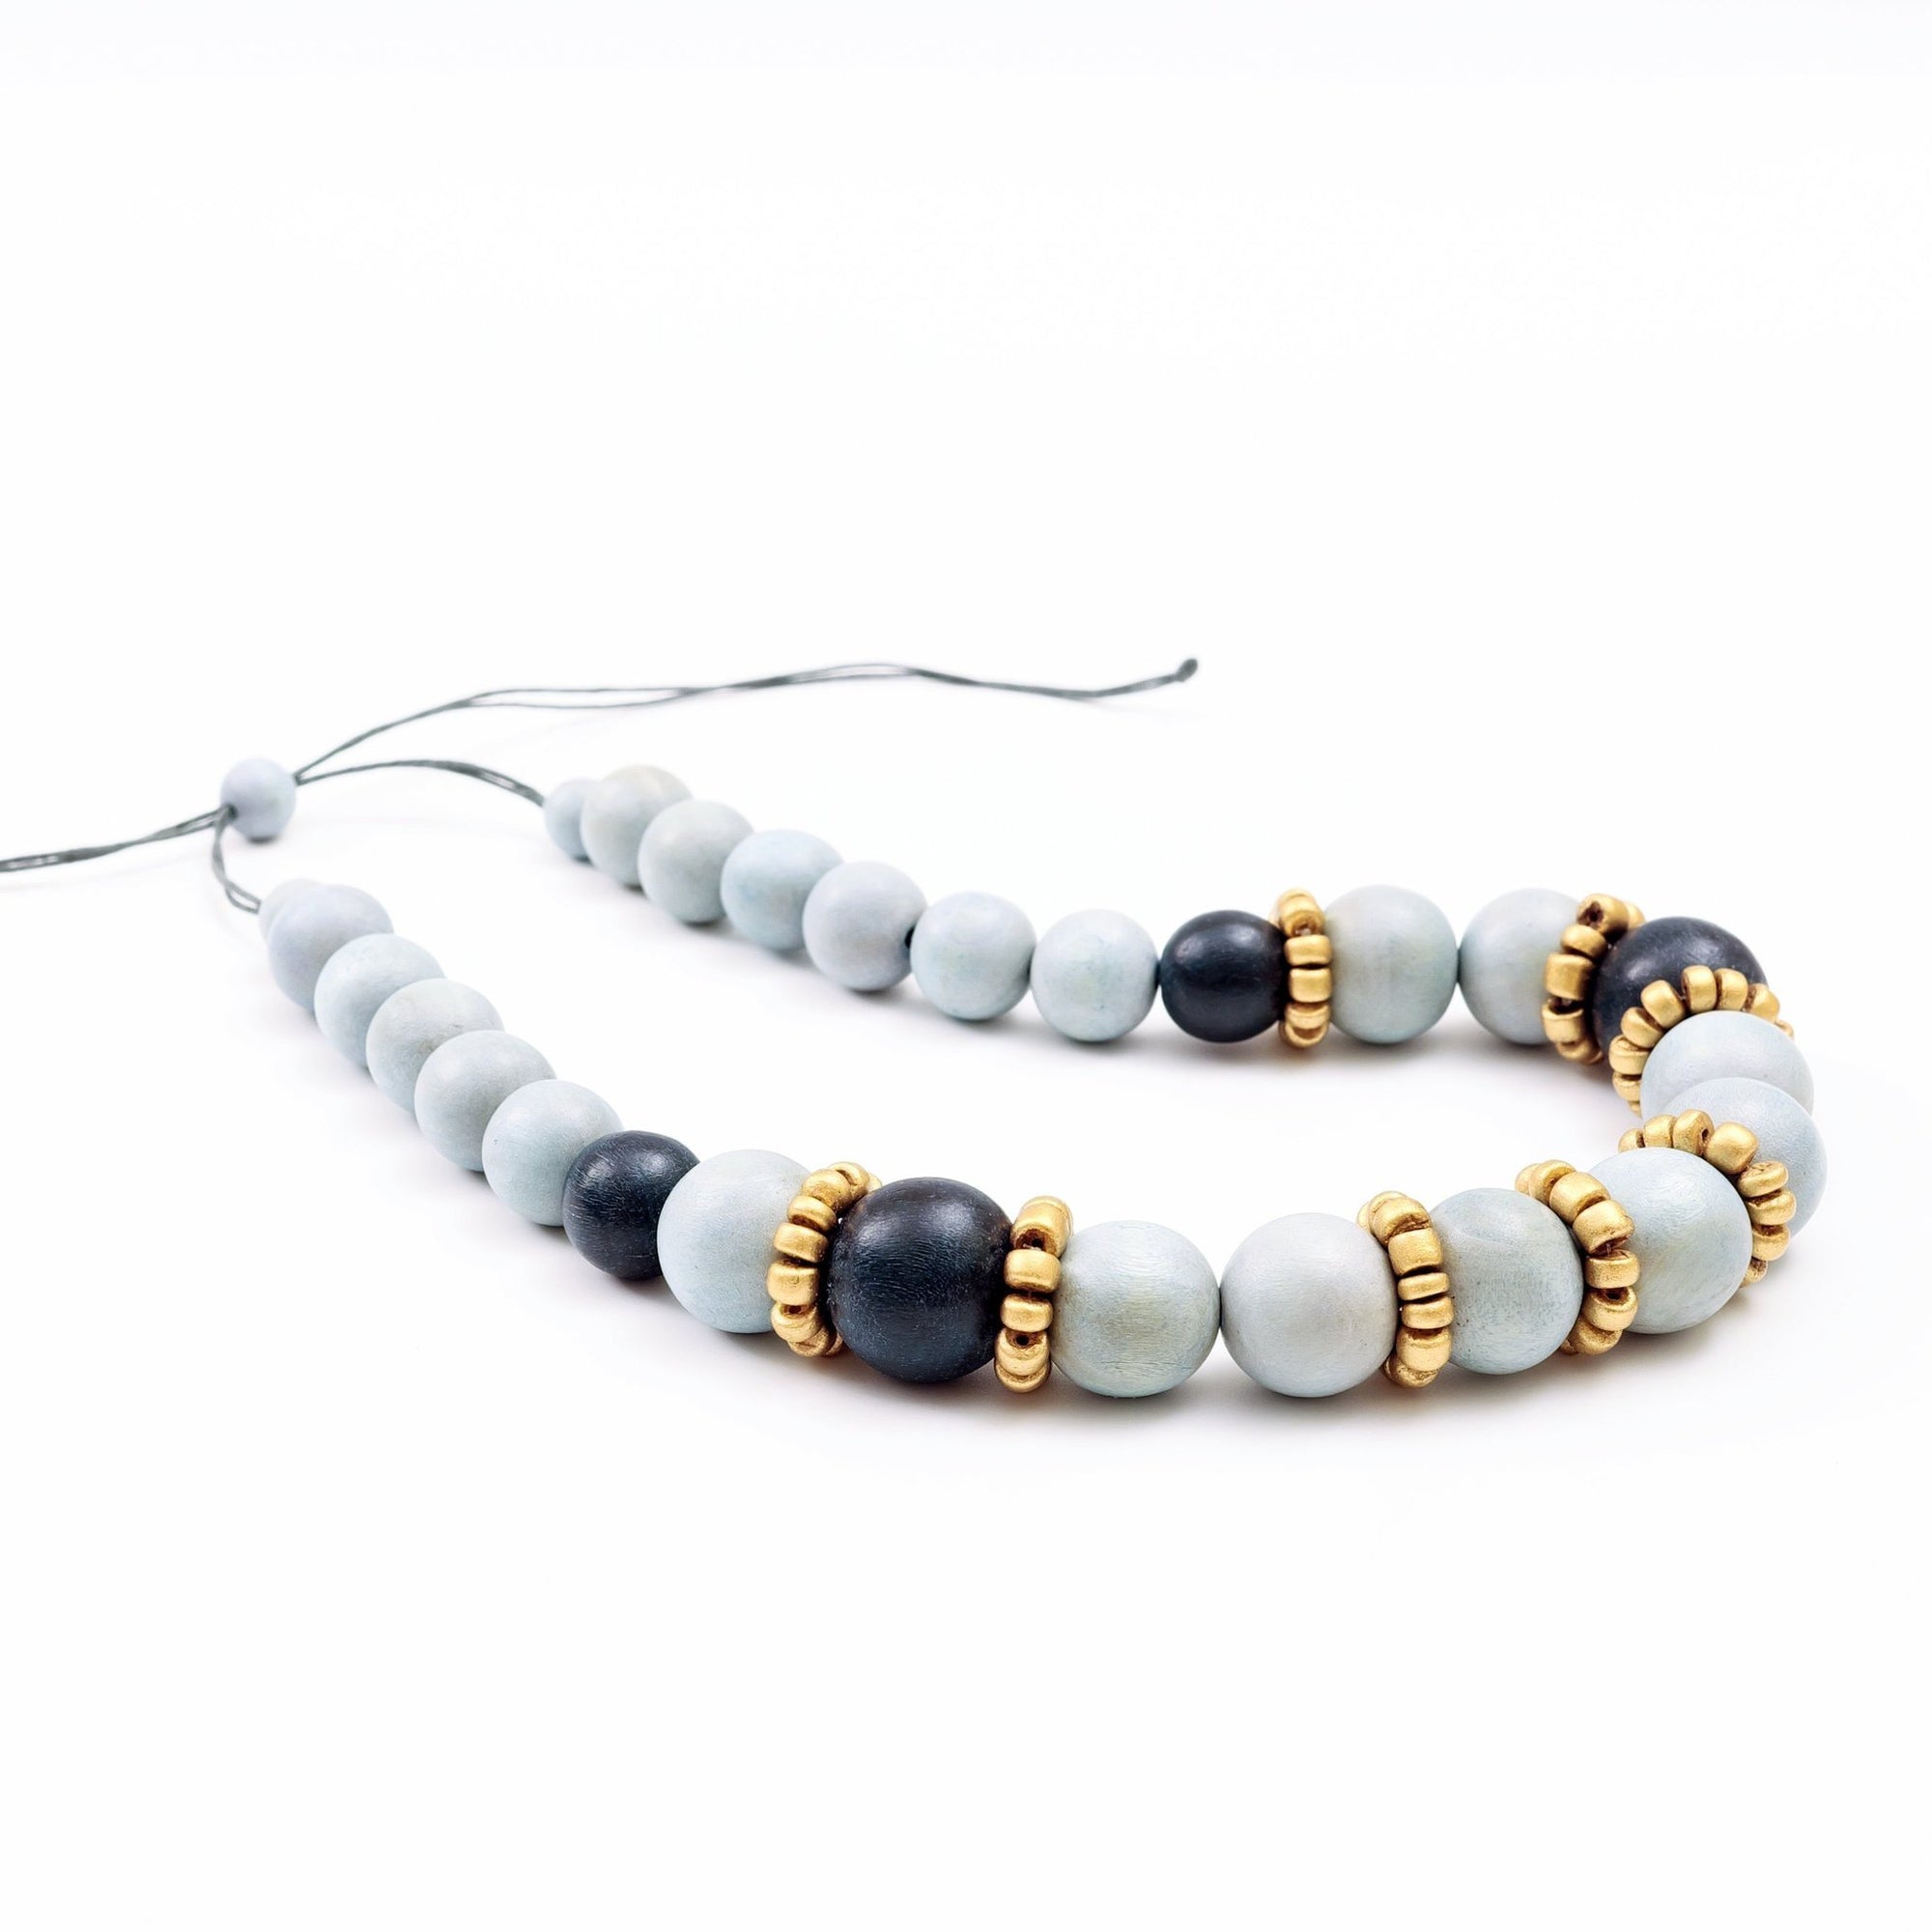 Jewelry - Handmade Grey Bead Necklace | LIKHÂ - LIKHÂ